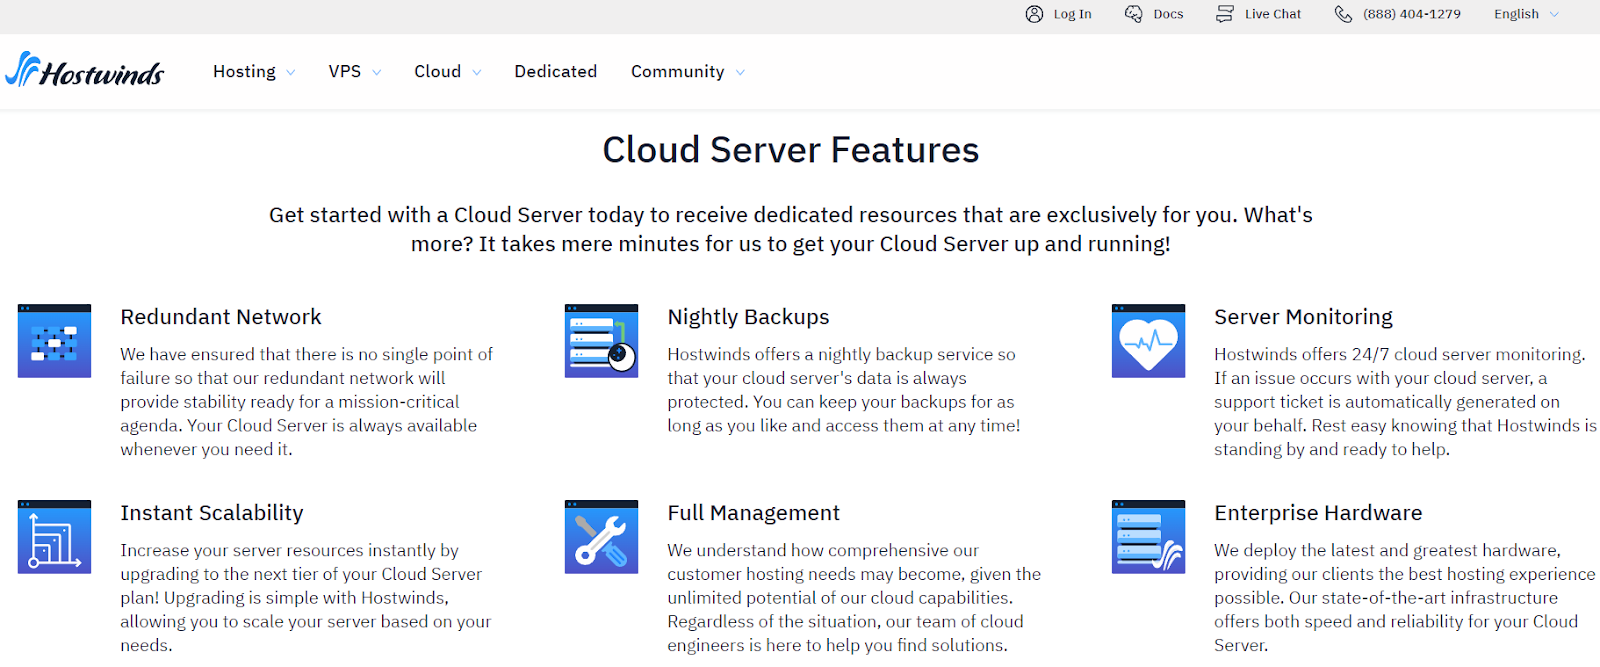 Hostwinds' cloud server page